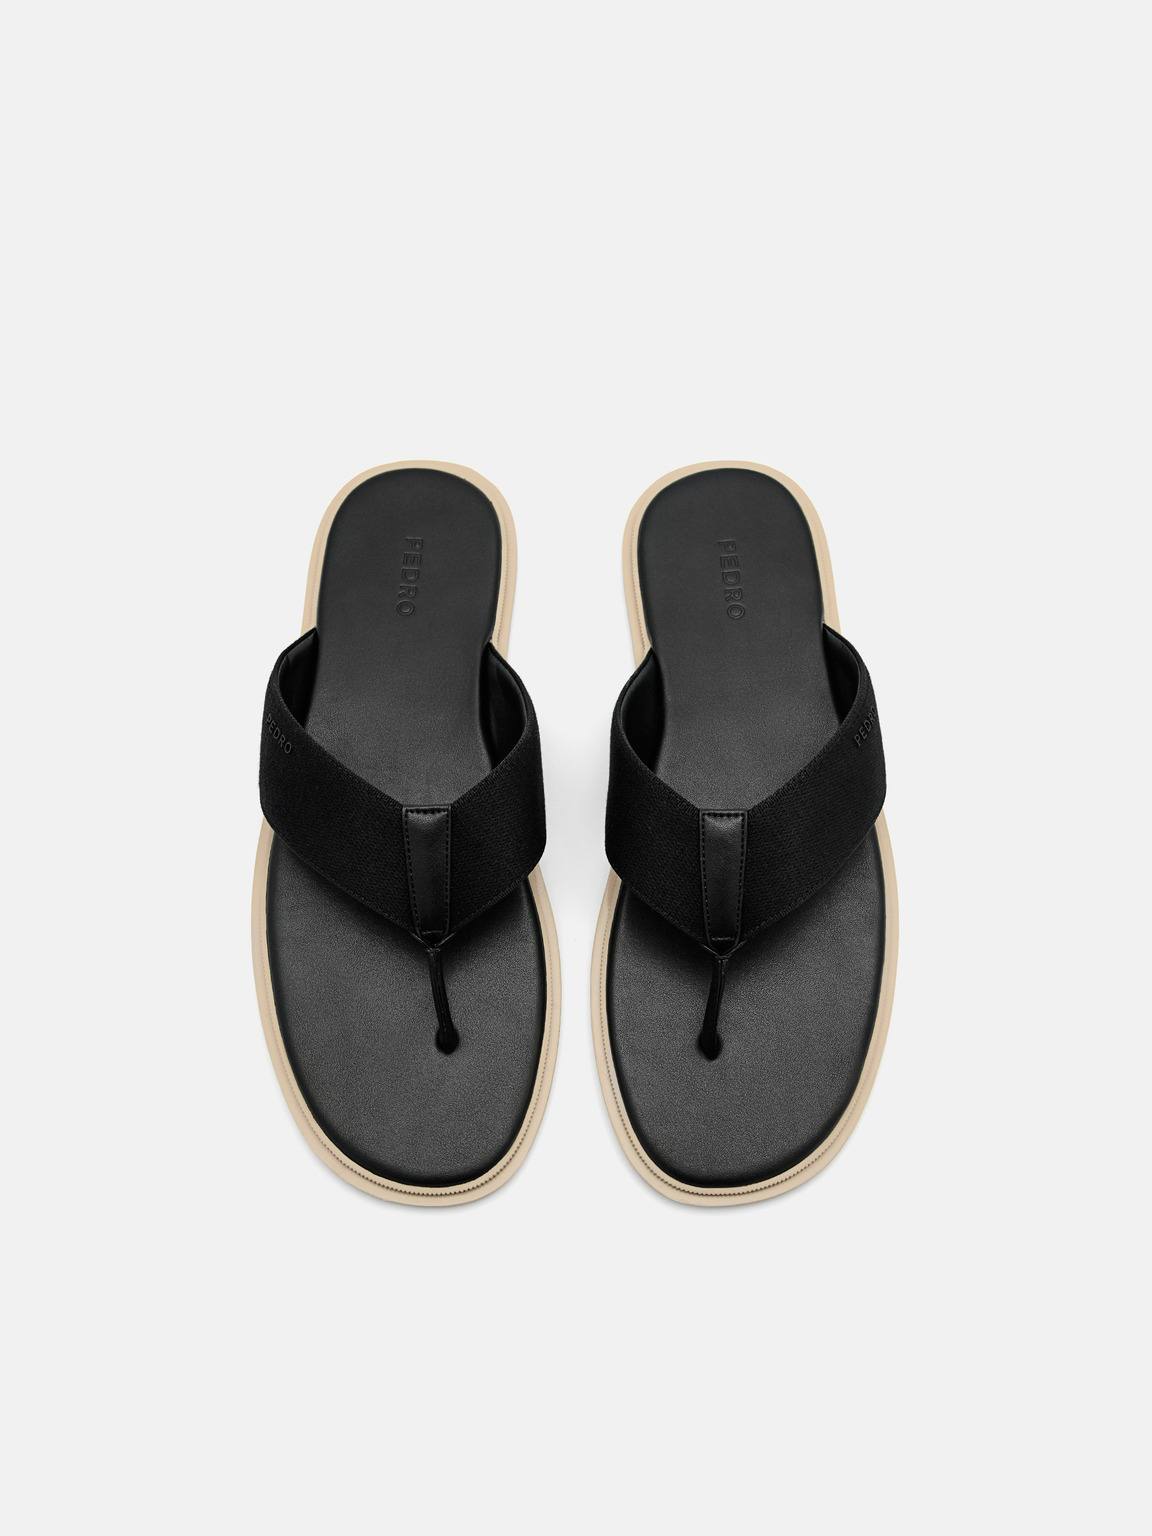 Fabric Thong Sandals, Black